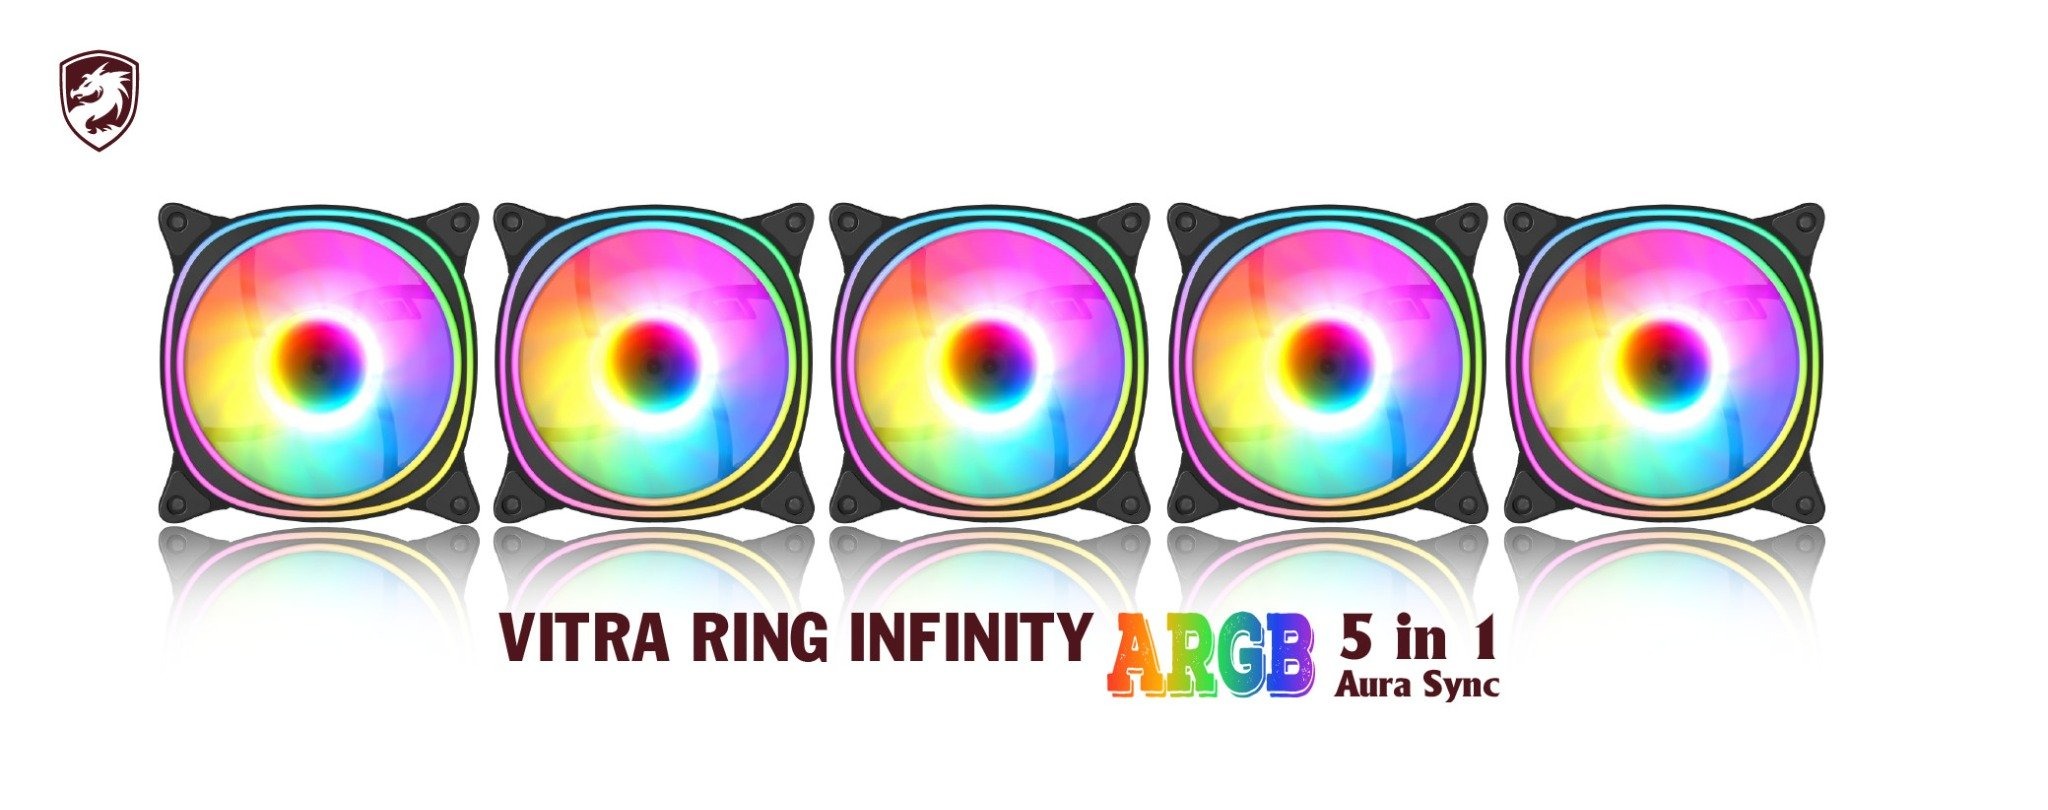 Bộ 5 fan VITRA RING INFINITY ARGB 5 IN 1 AURA SYNC BLACK (Màu Đen/Sync Main)